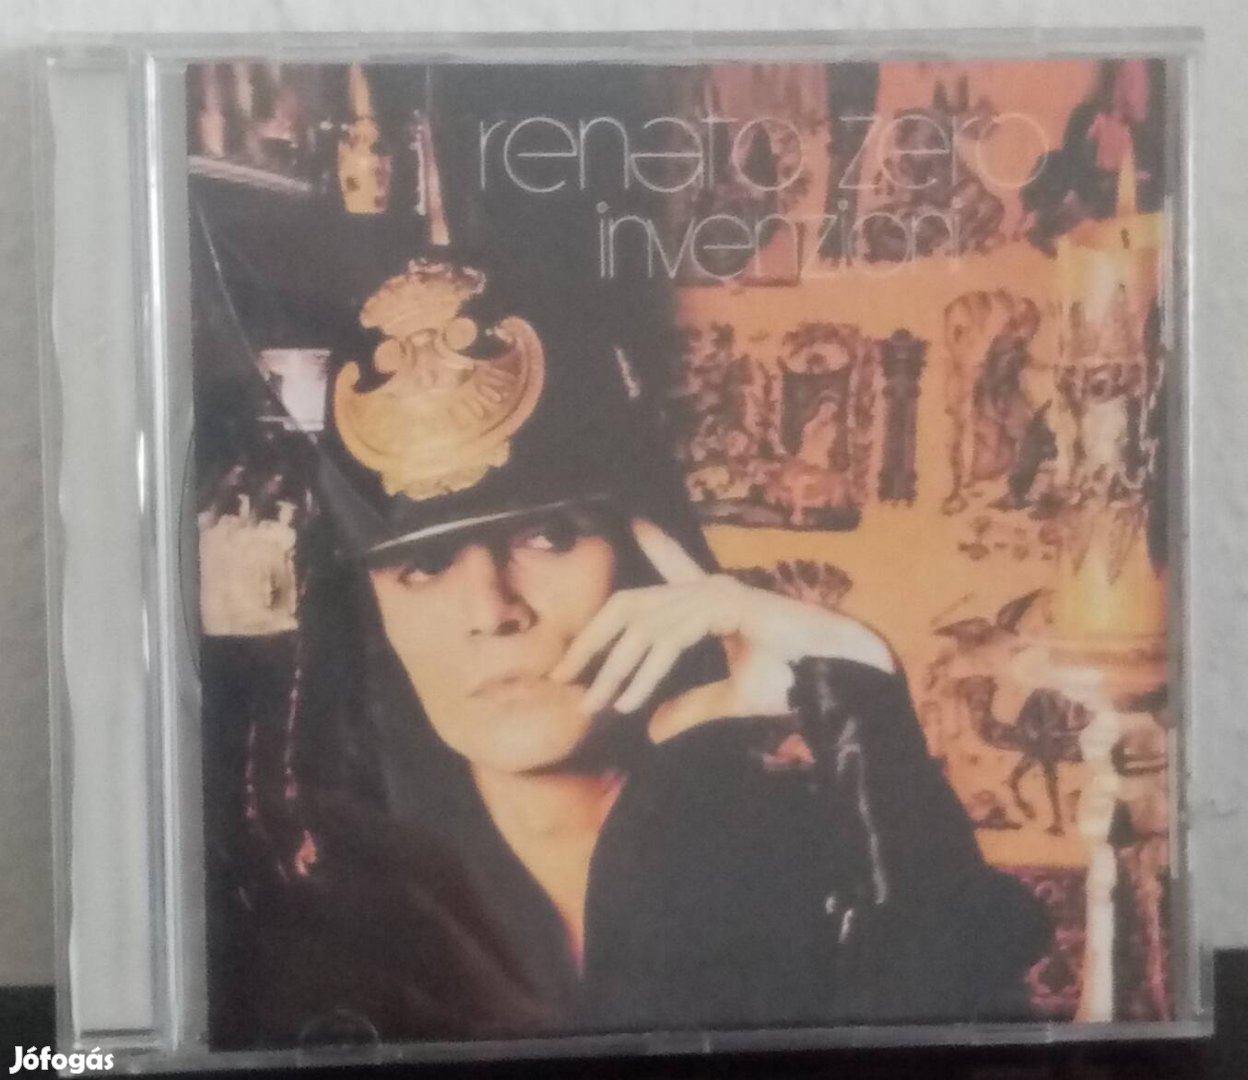 Renato Zero - Invenzioni - CD-album eladó 